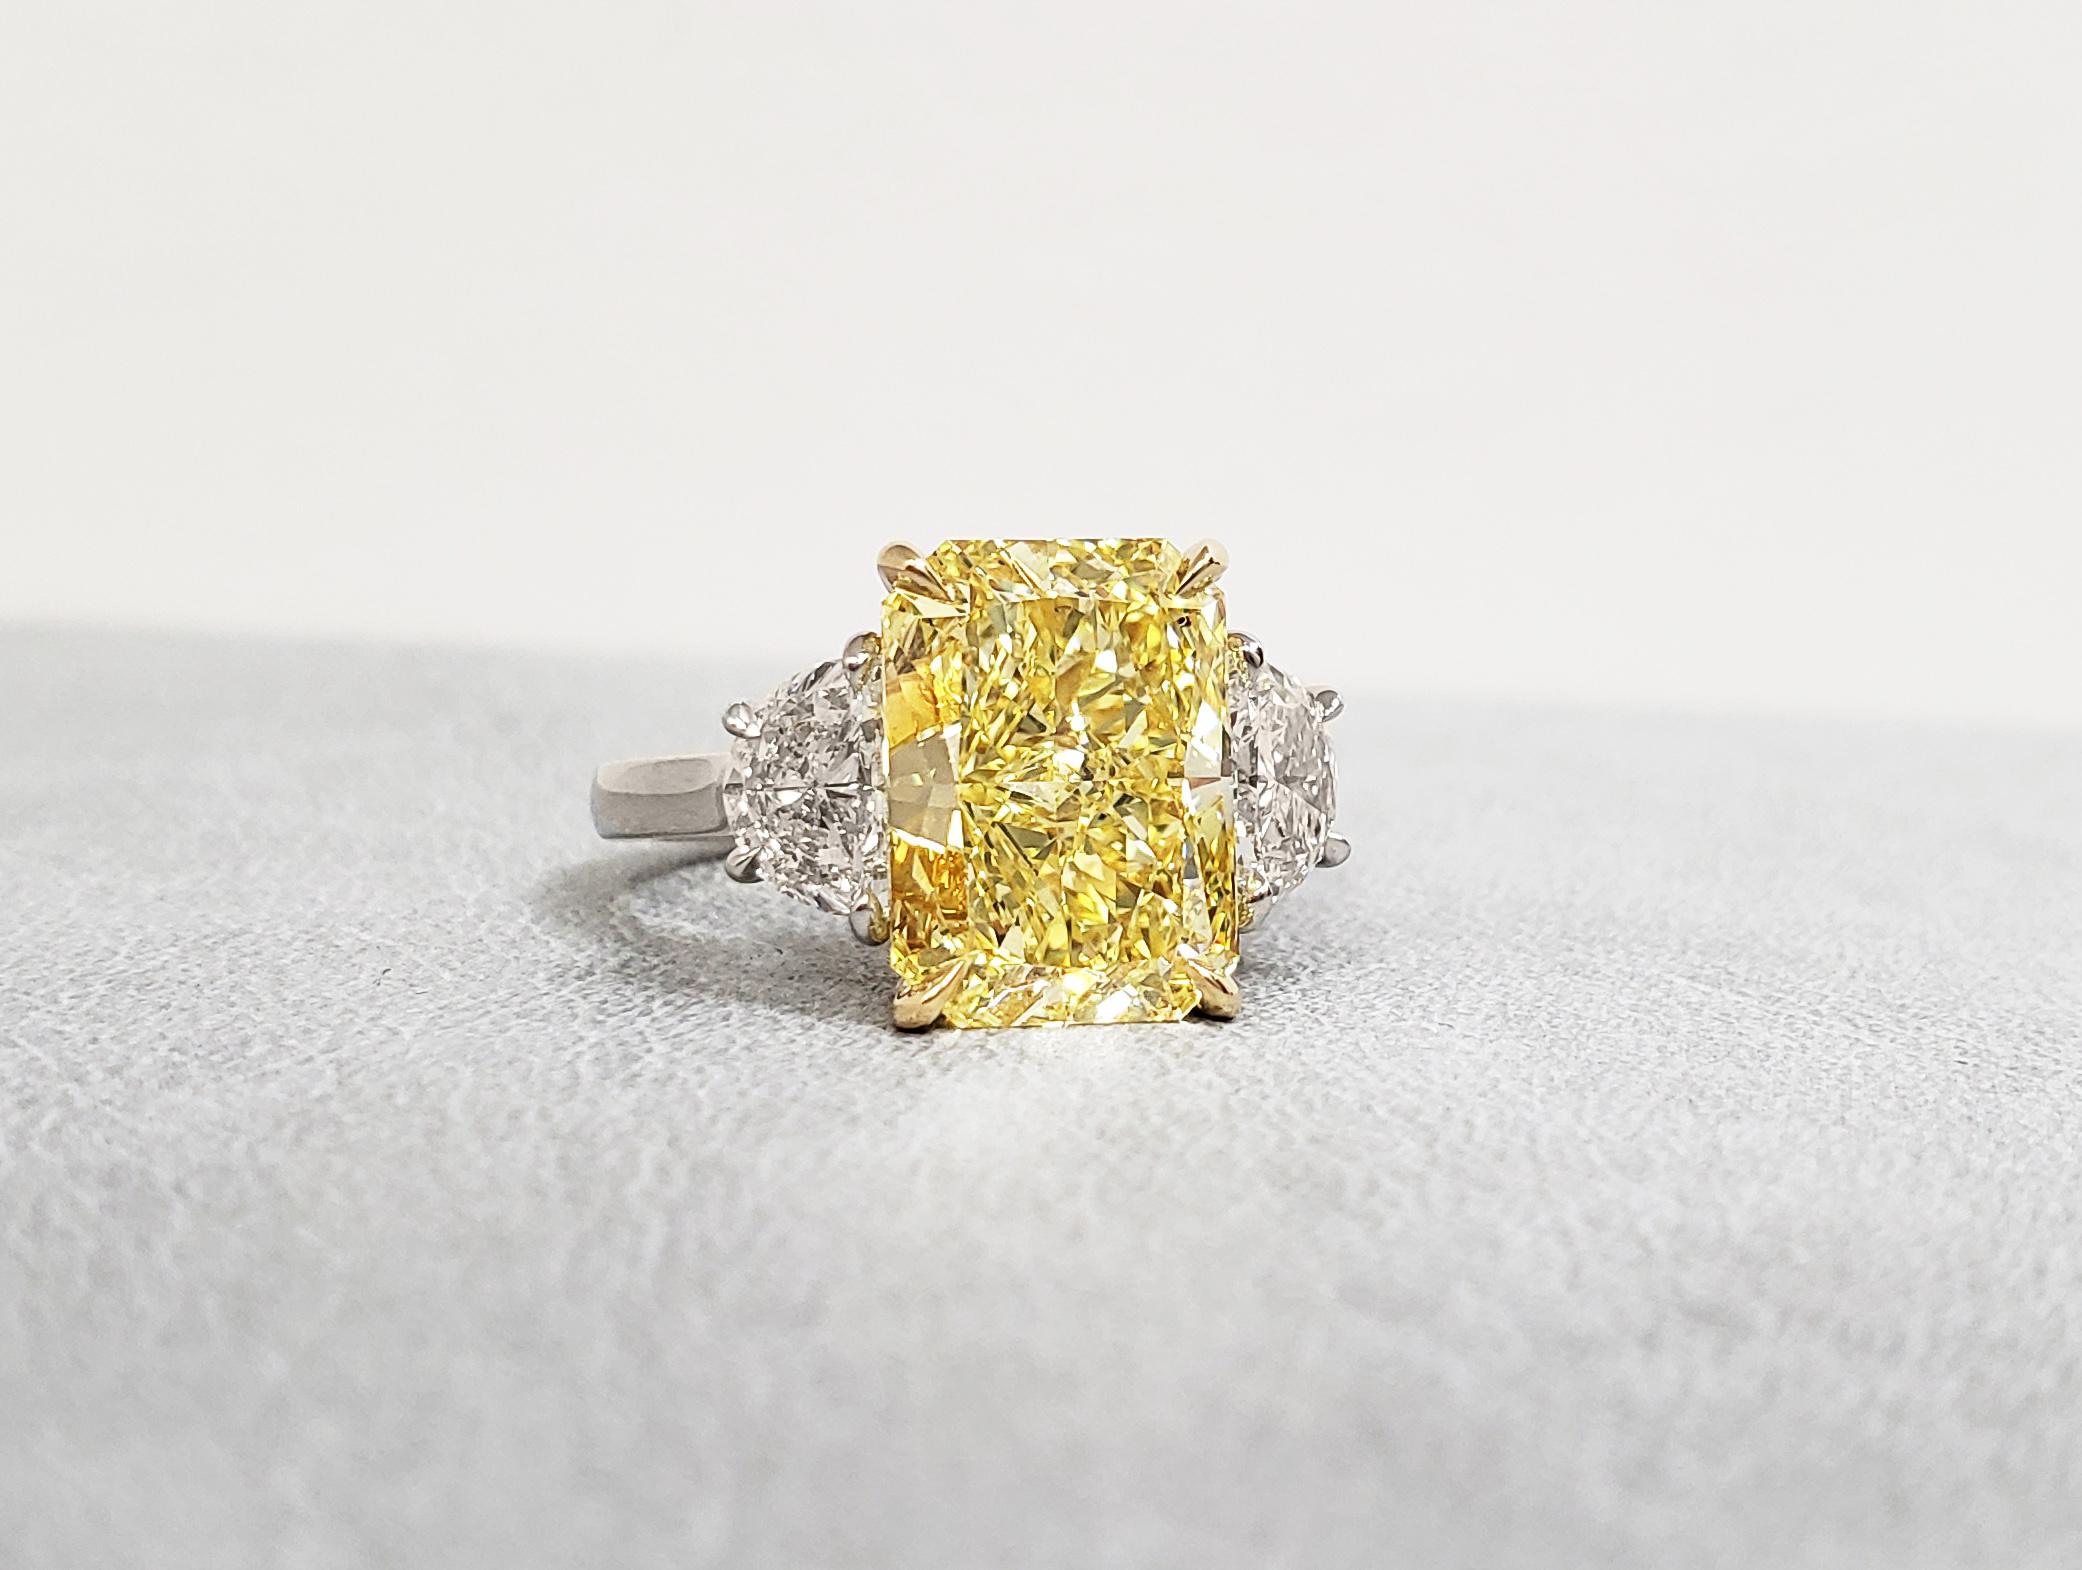 Radiant Cut Scarselli 5 Carat Fancy Intense Yellow Diamond Ring in Platinum GIA Certified